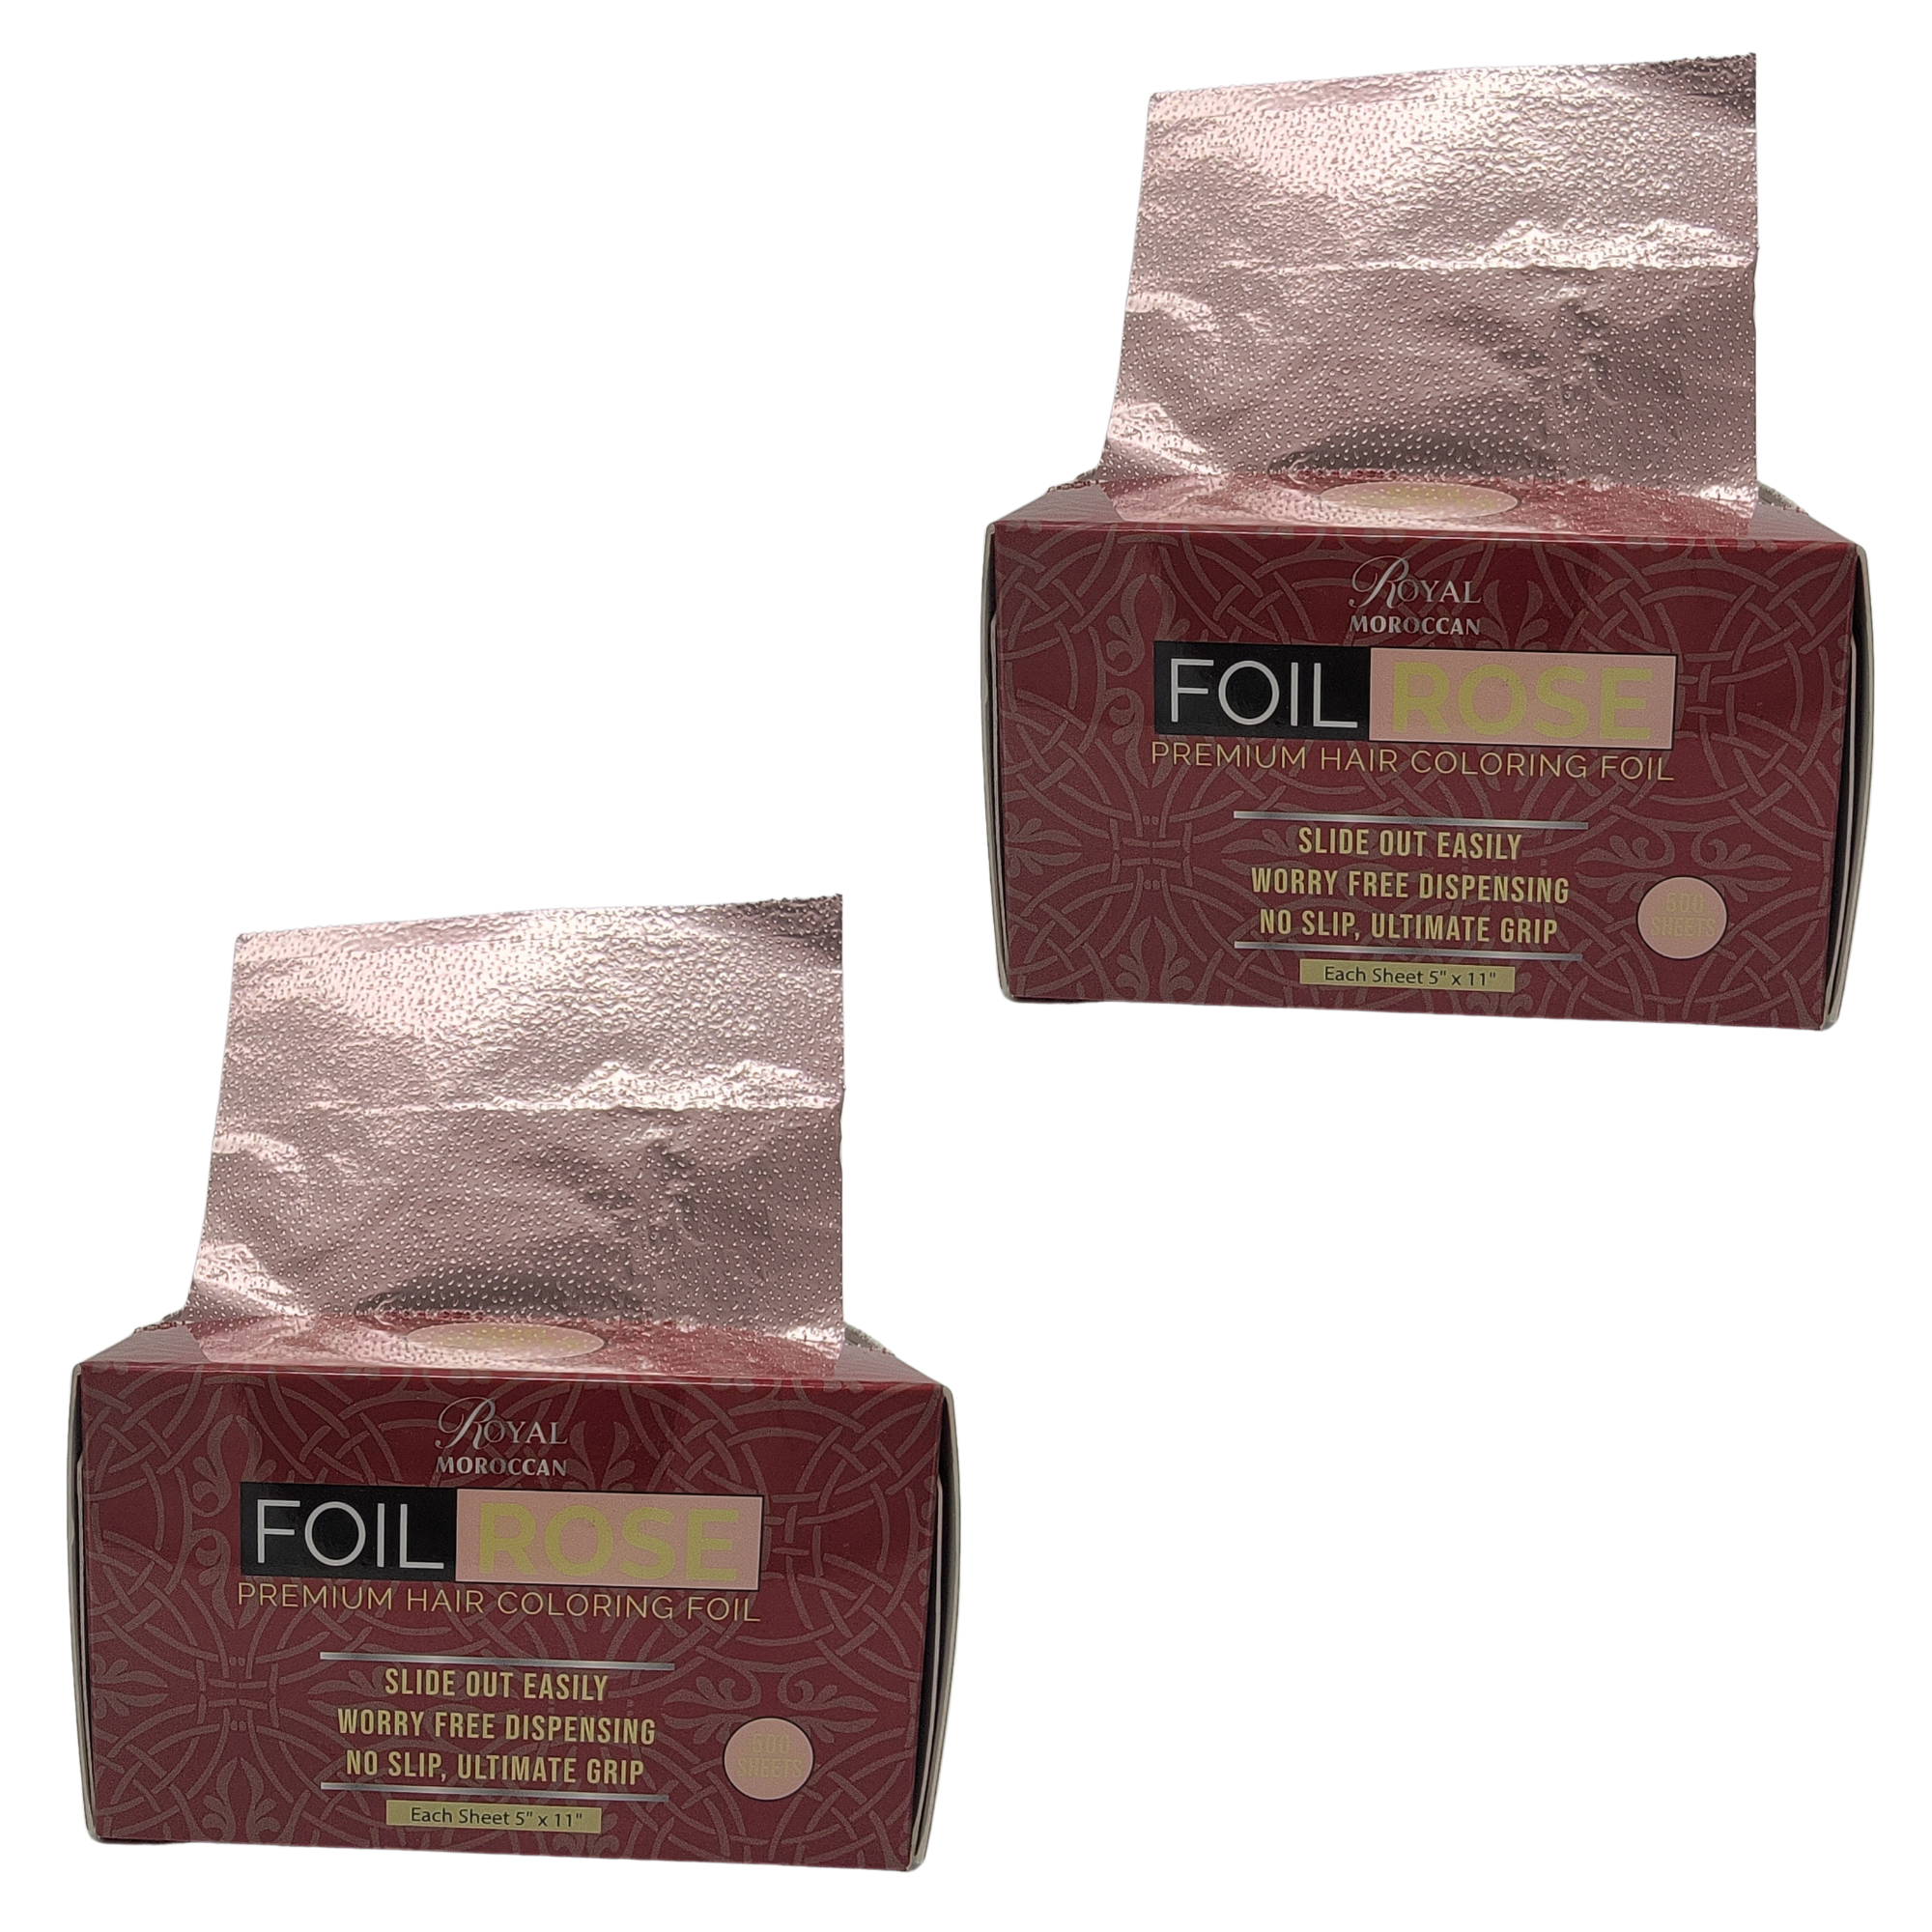 Framar Ros All Day Pop Up Hair Foil, Aluminum Foil Sheets, Hair Foils For  Highlighting - 500 Foil Sheets